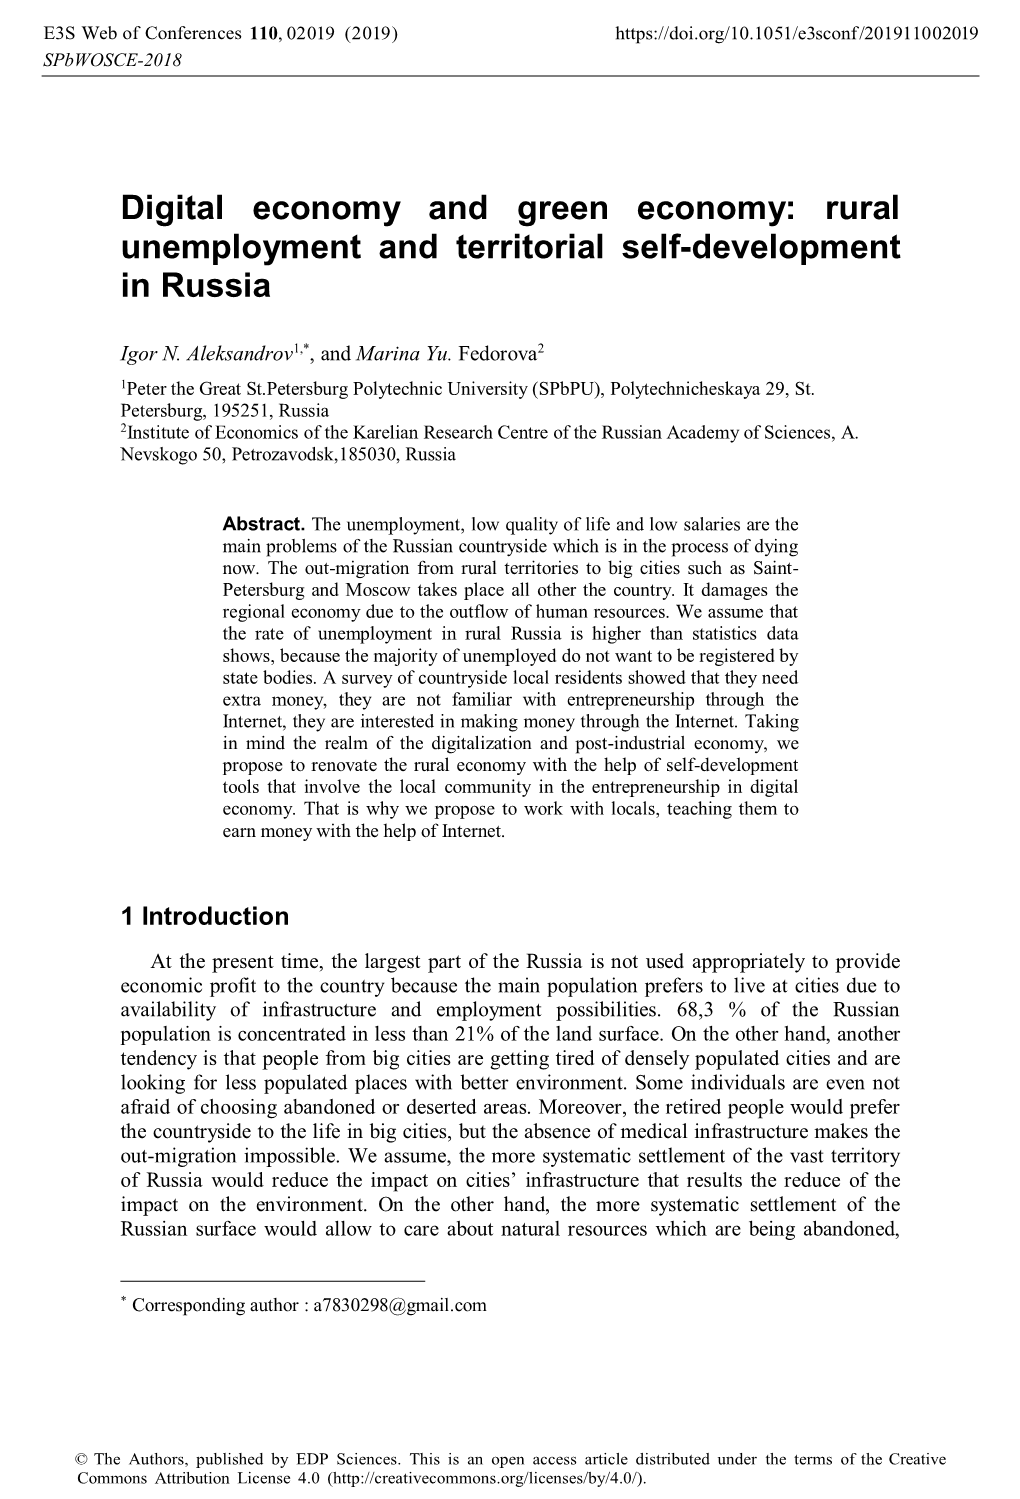 Rural Unemployment and Territorial Self-Development in Russia